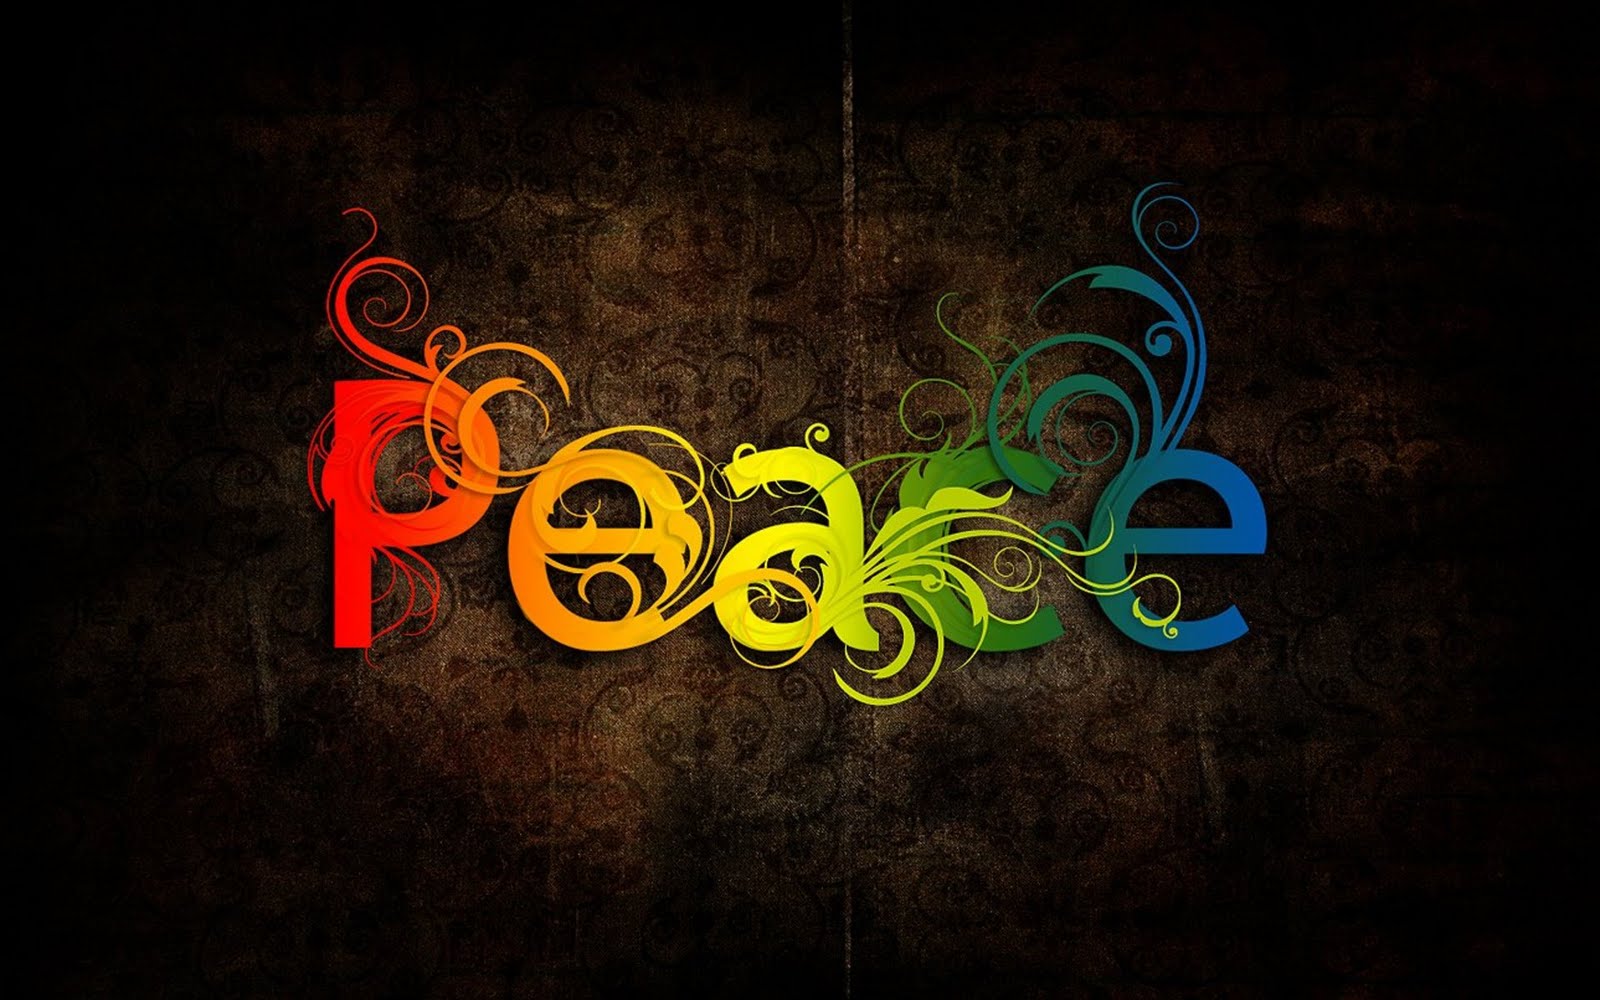 Peace hd wallpaper, peace wallpaper | Amazing Wallpapers